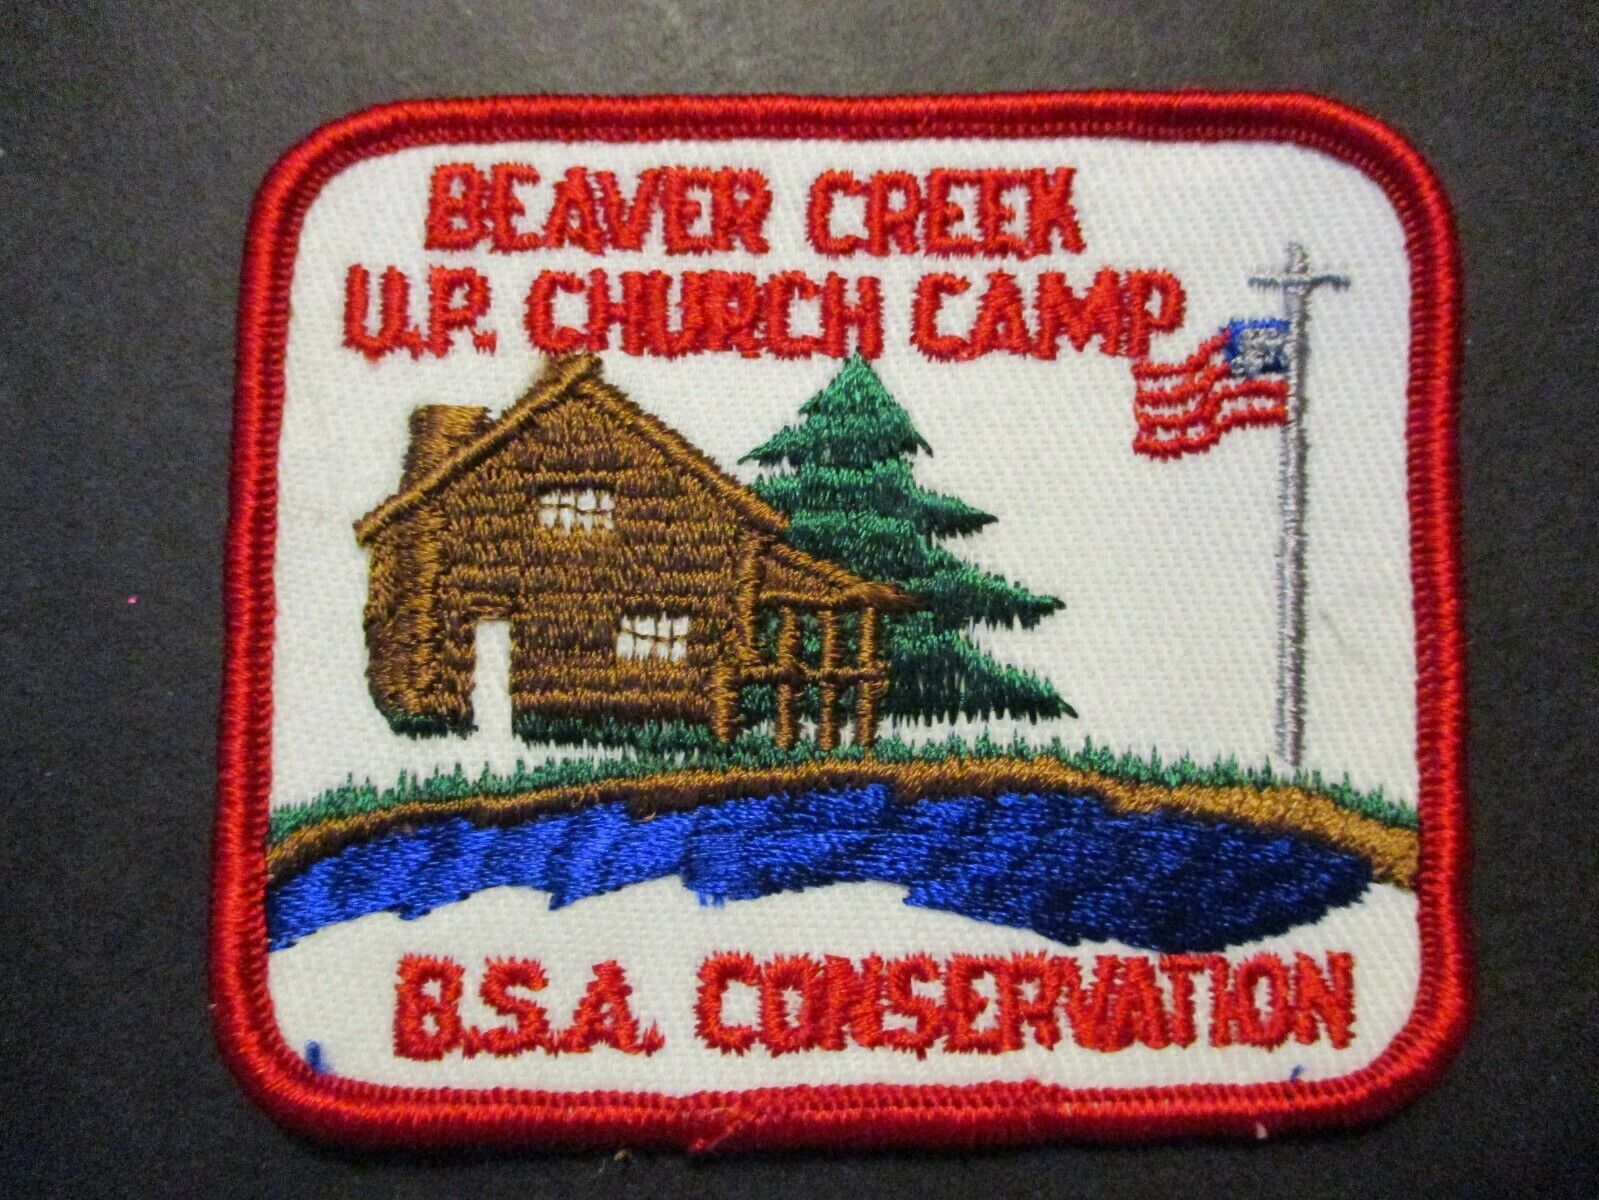 Beaver Creek U.P. Church Camp BSA Conservation boy scout camp patch